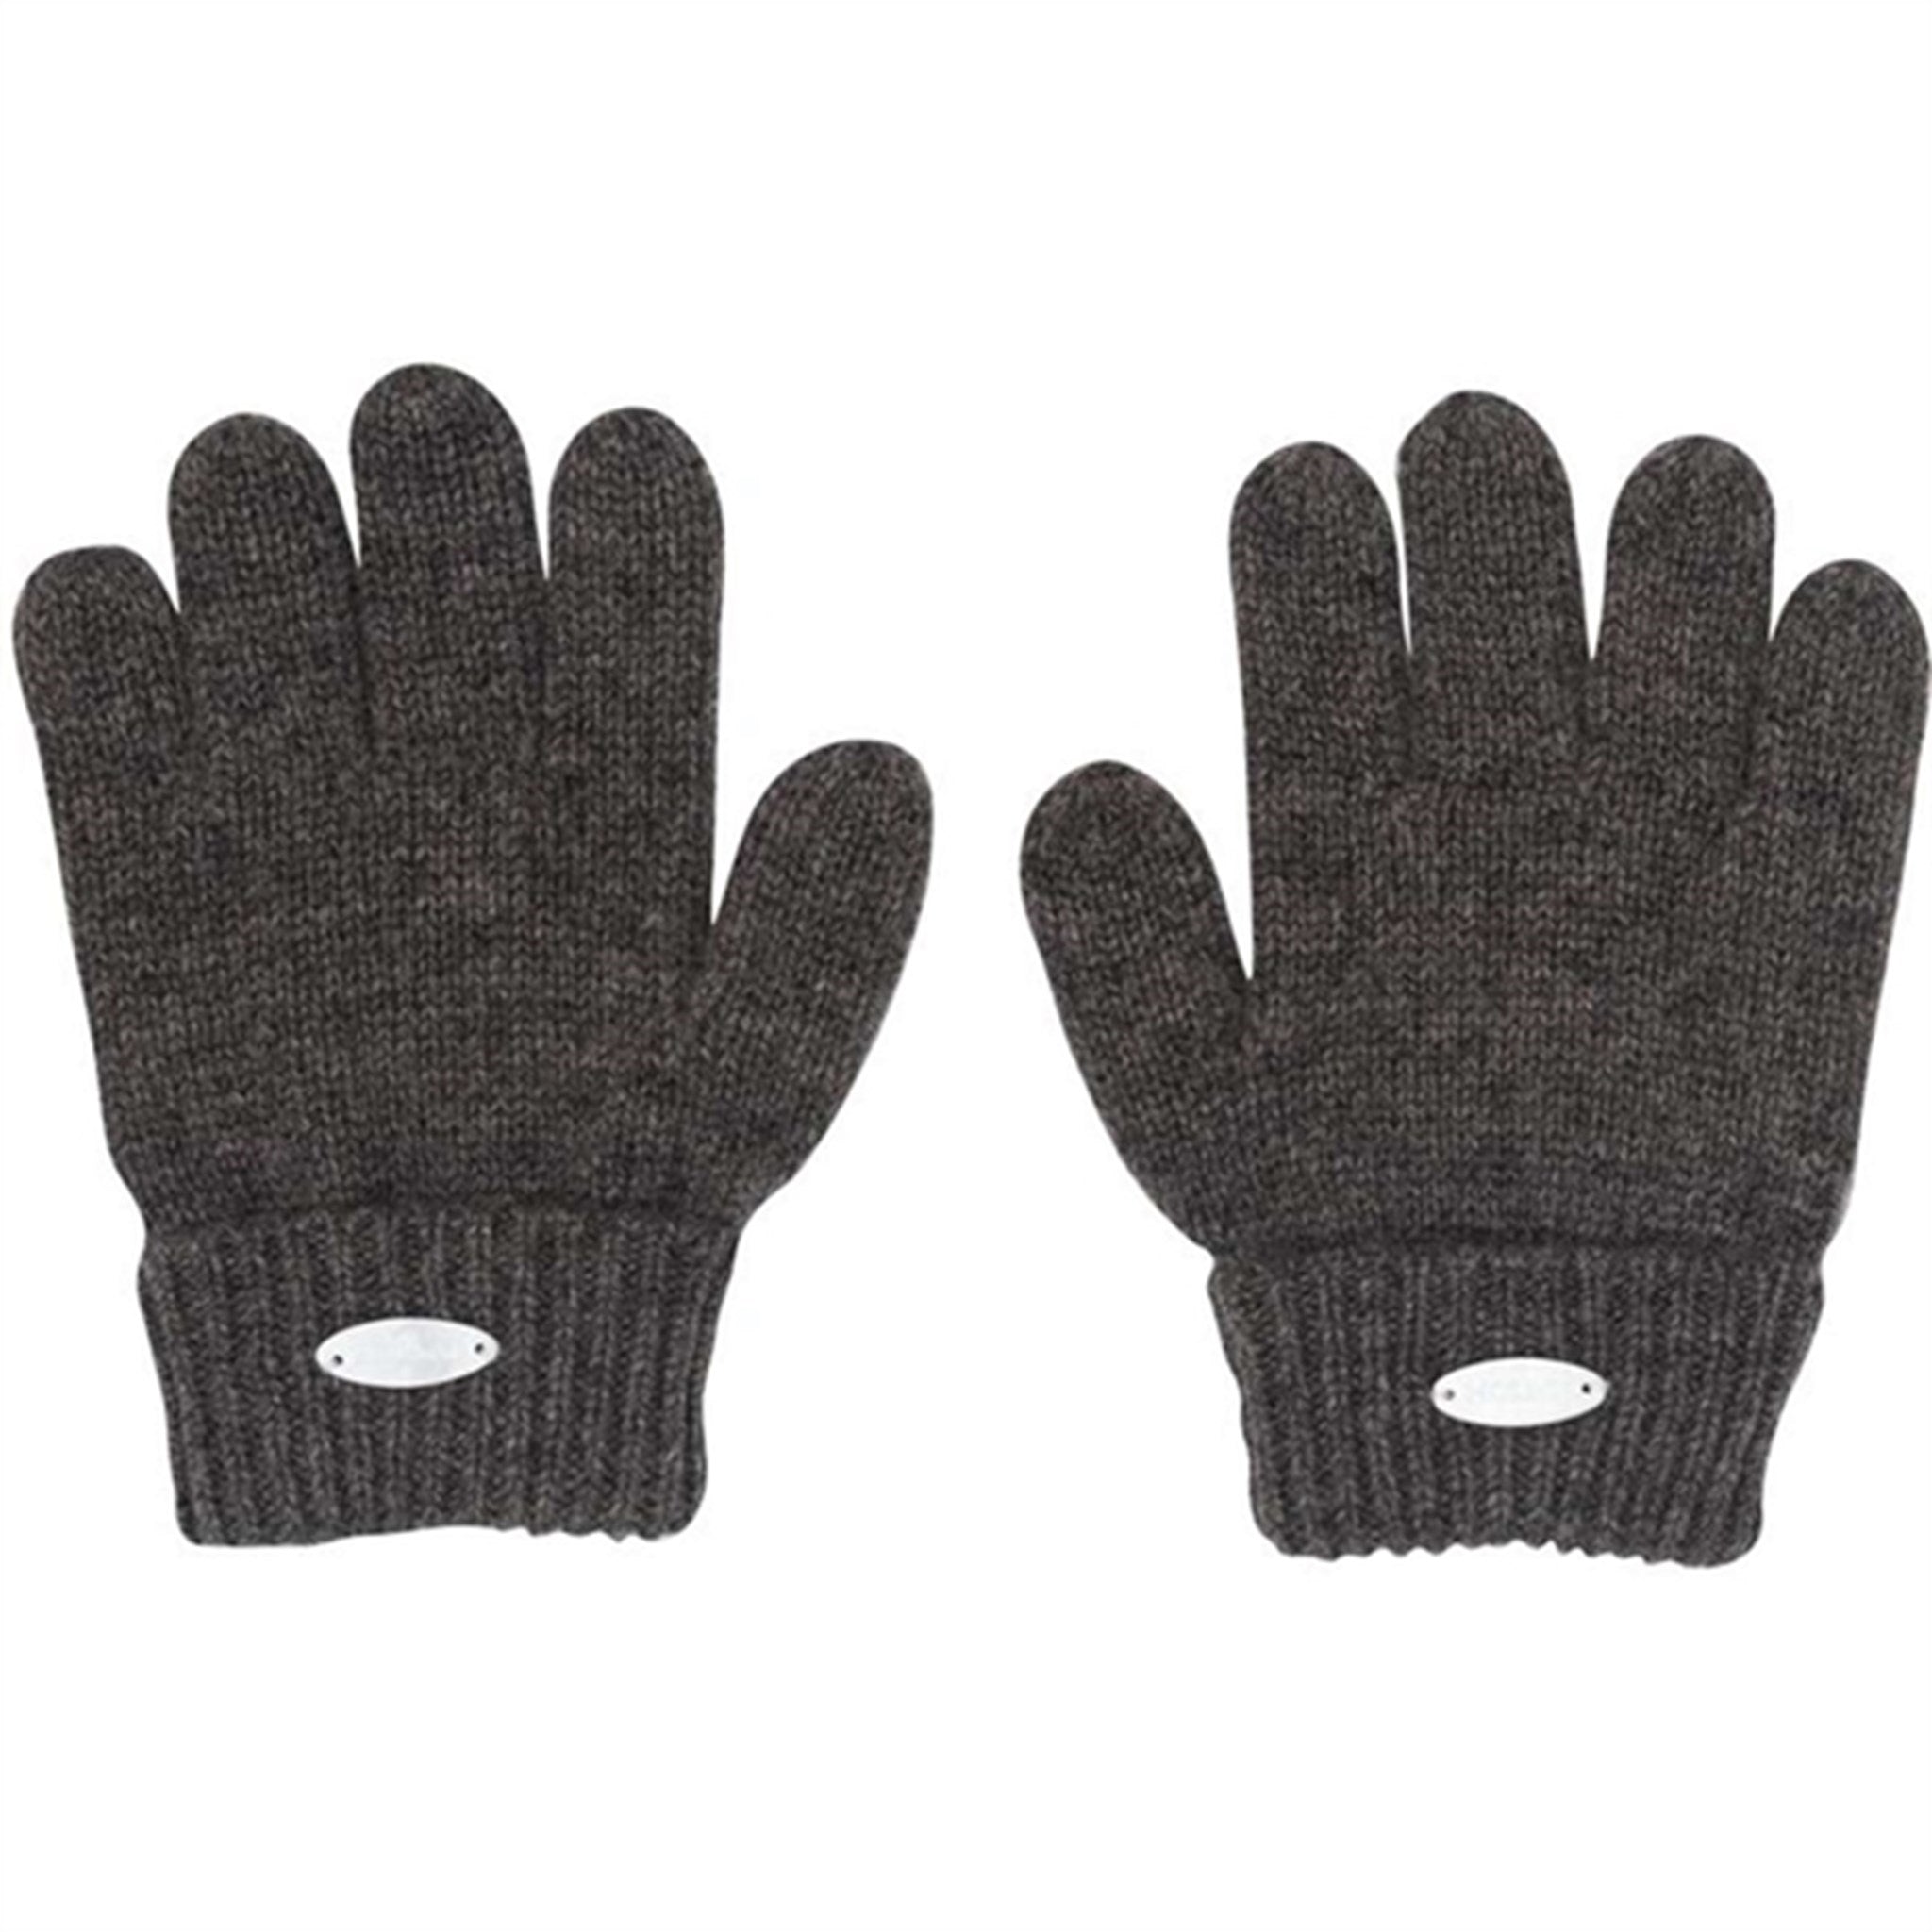 HOLMM Otter Kim Cashmere Knit Gloves